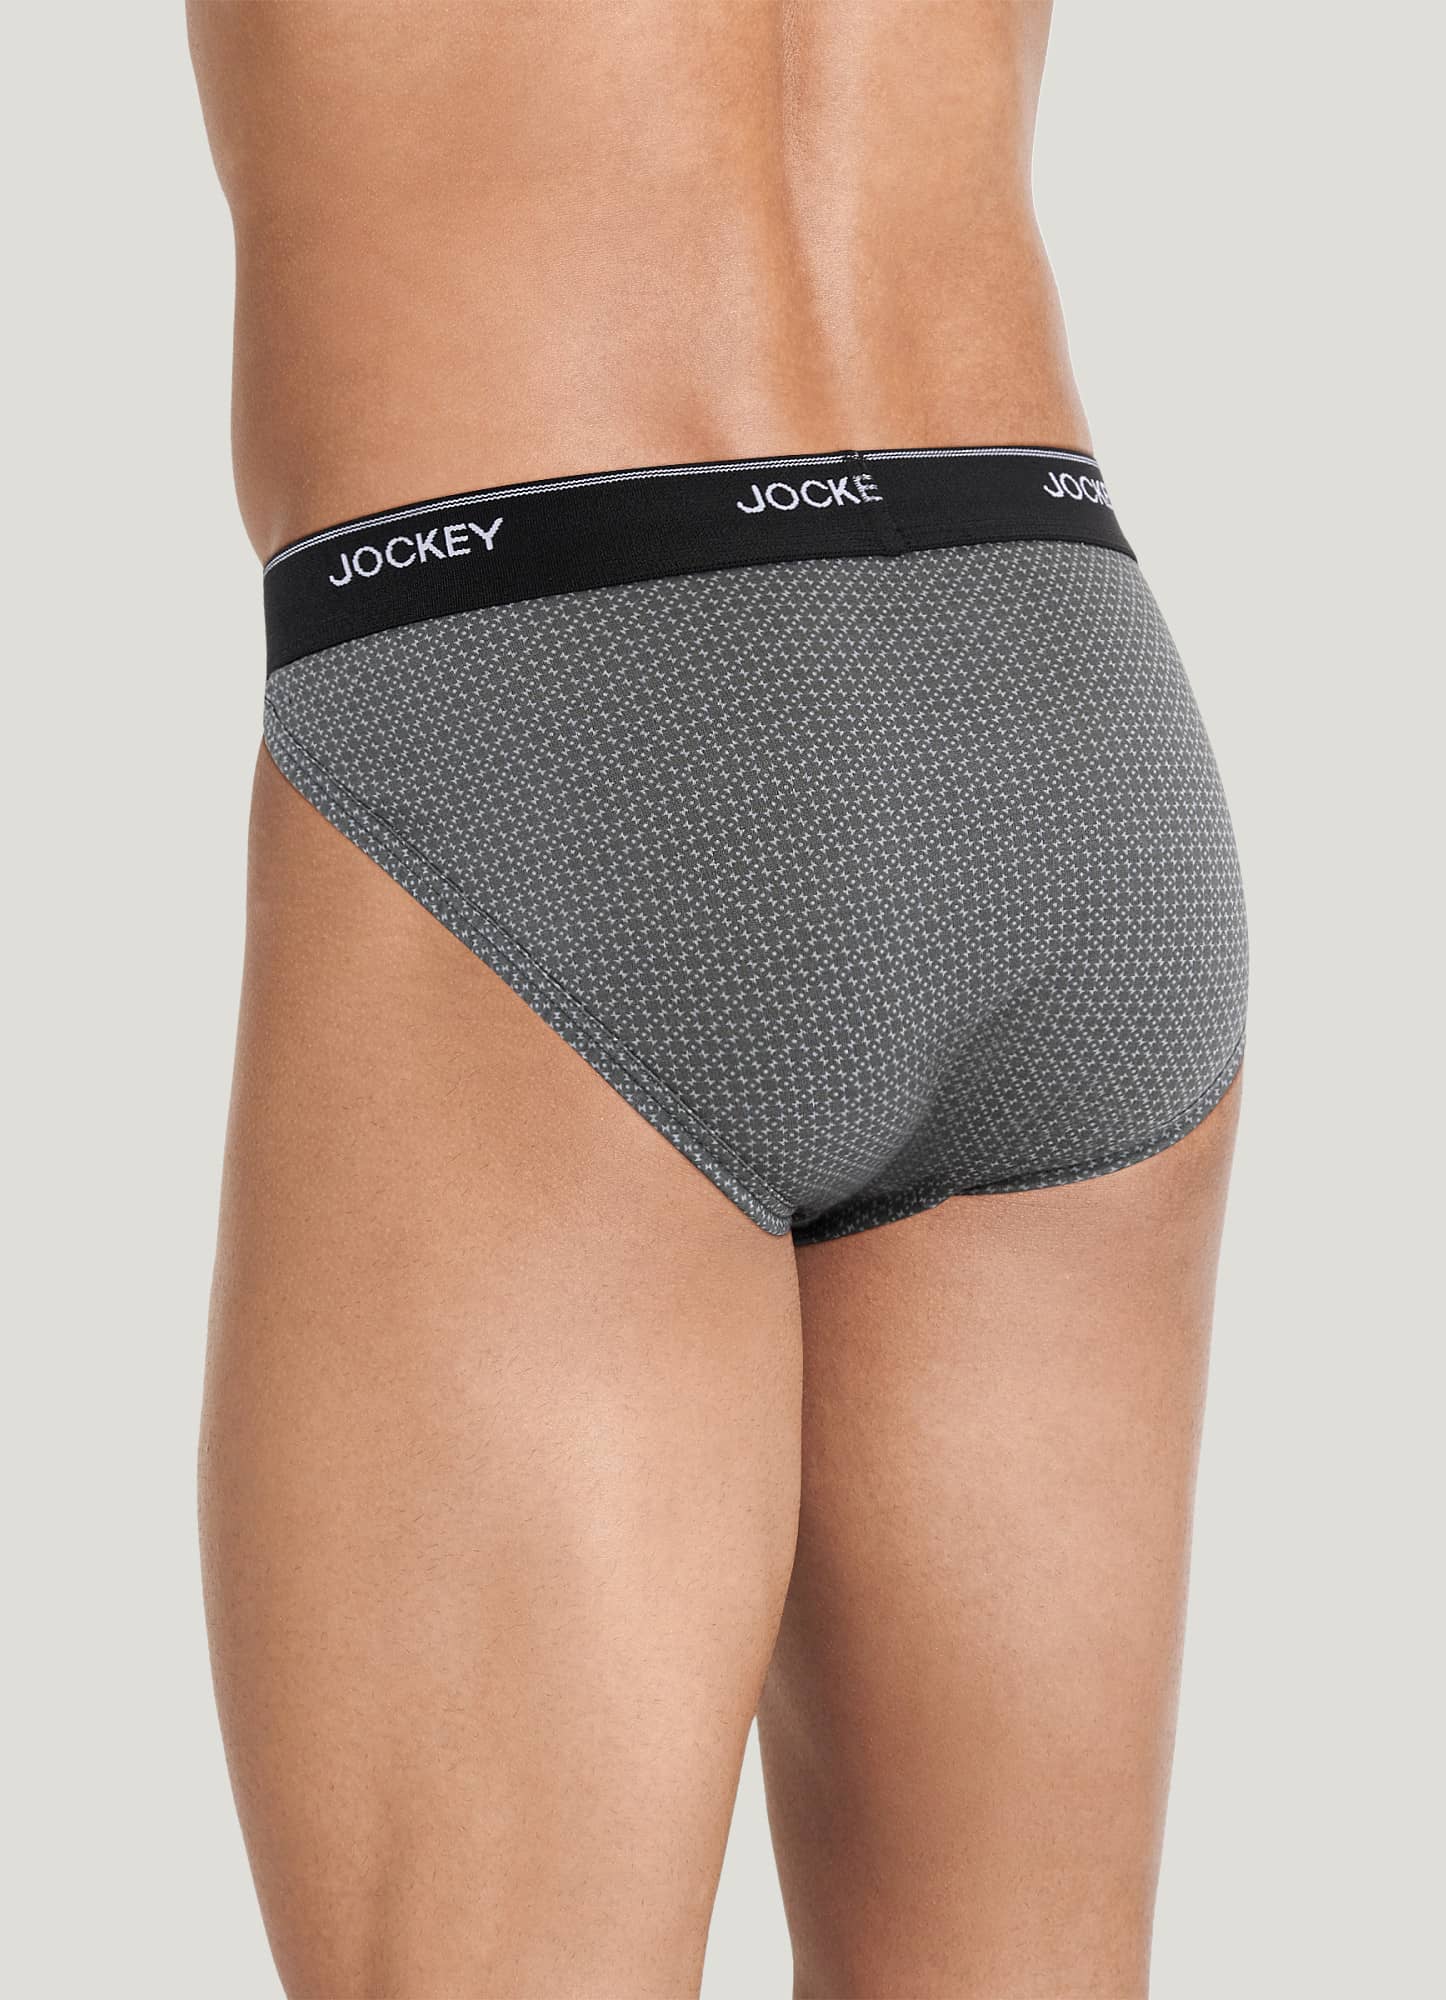 Lot of 9 Men's Briefs Underwear Mixed colors Hanes / Jockey Brand New